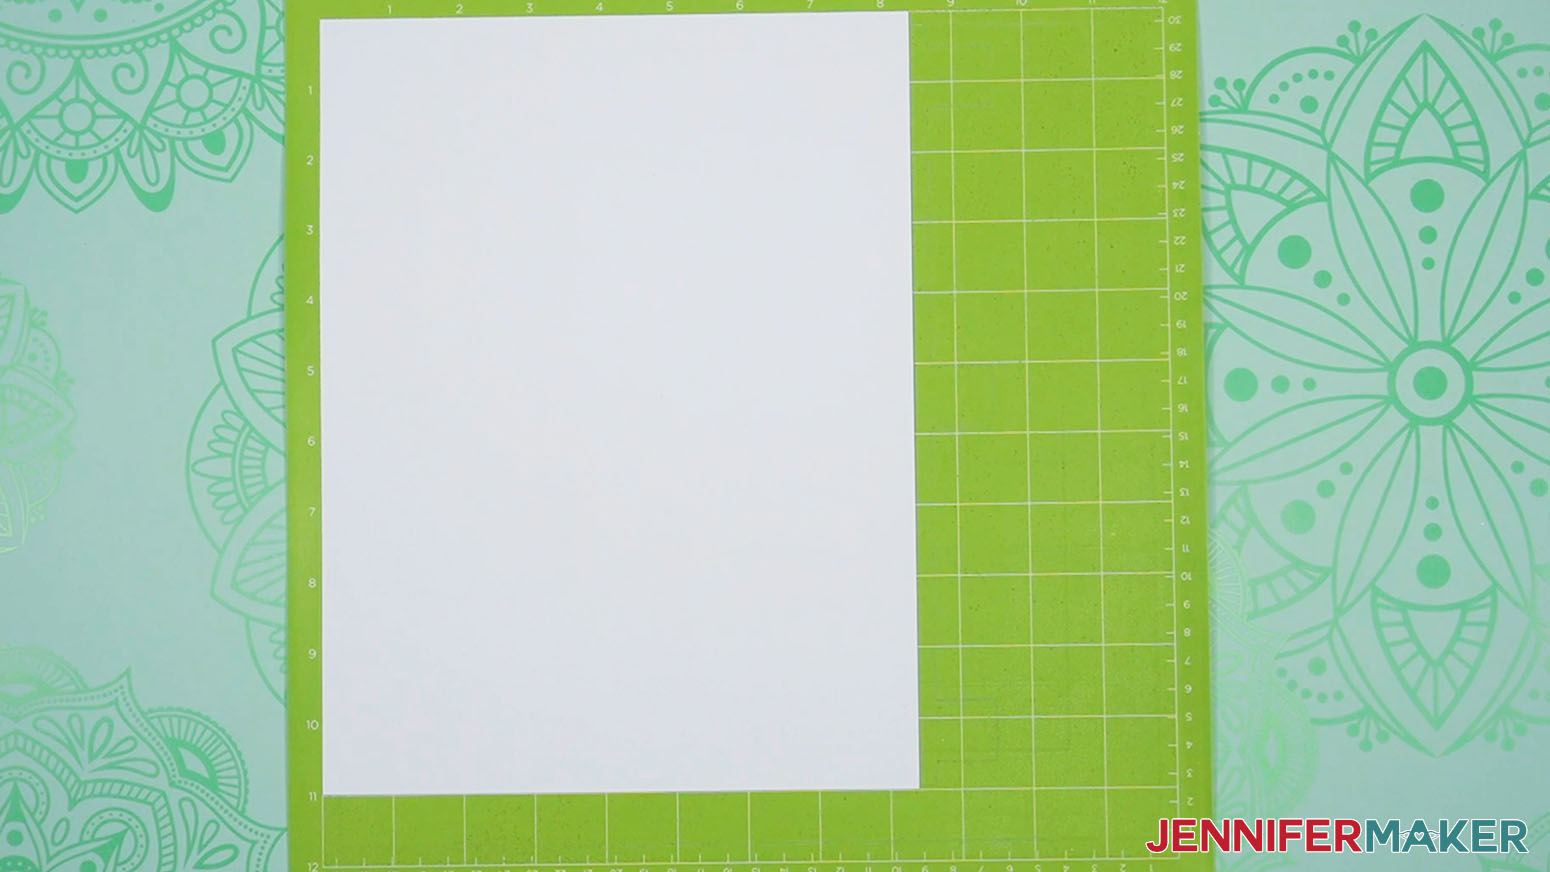 Place the EasySubli sheet shiny side down on a green StandardGrip machine mat.